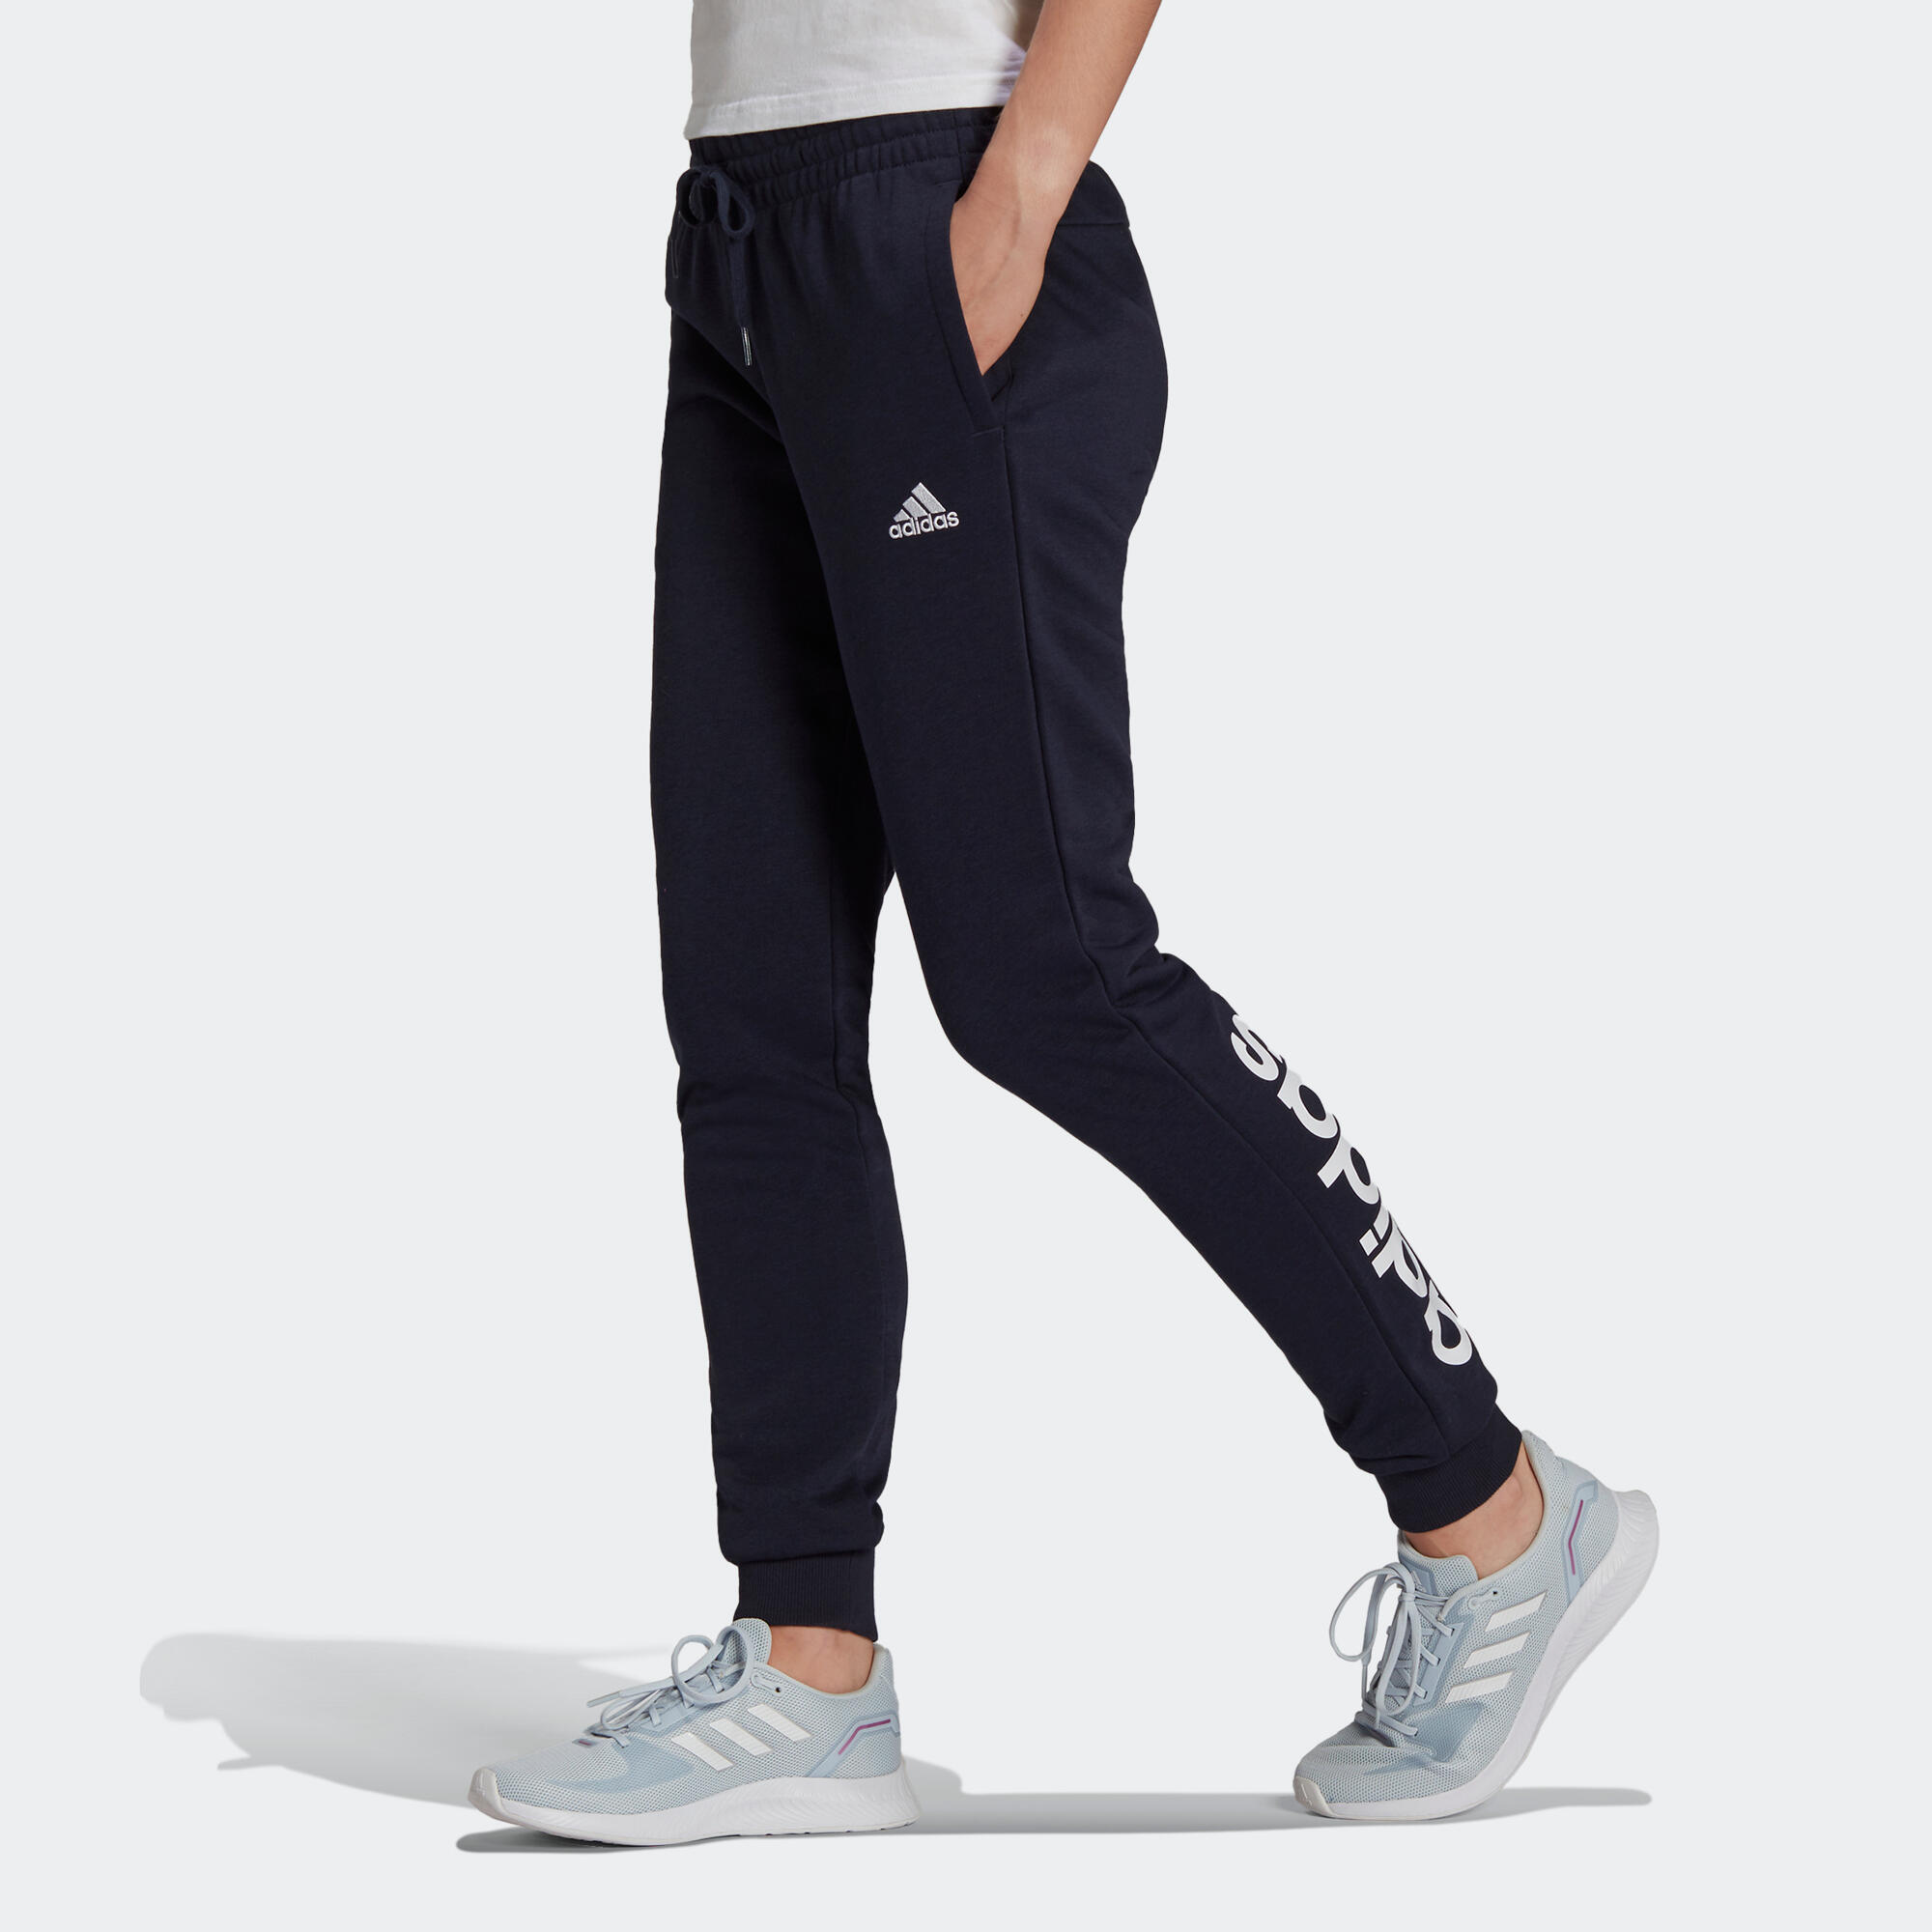 Adidas Women's Fitness Majority Cotton Slim Jogging Bottoms - Blue